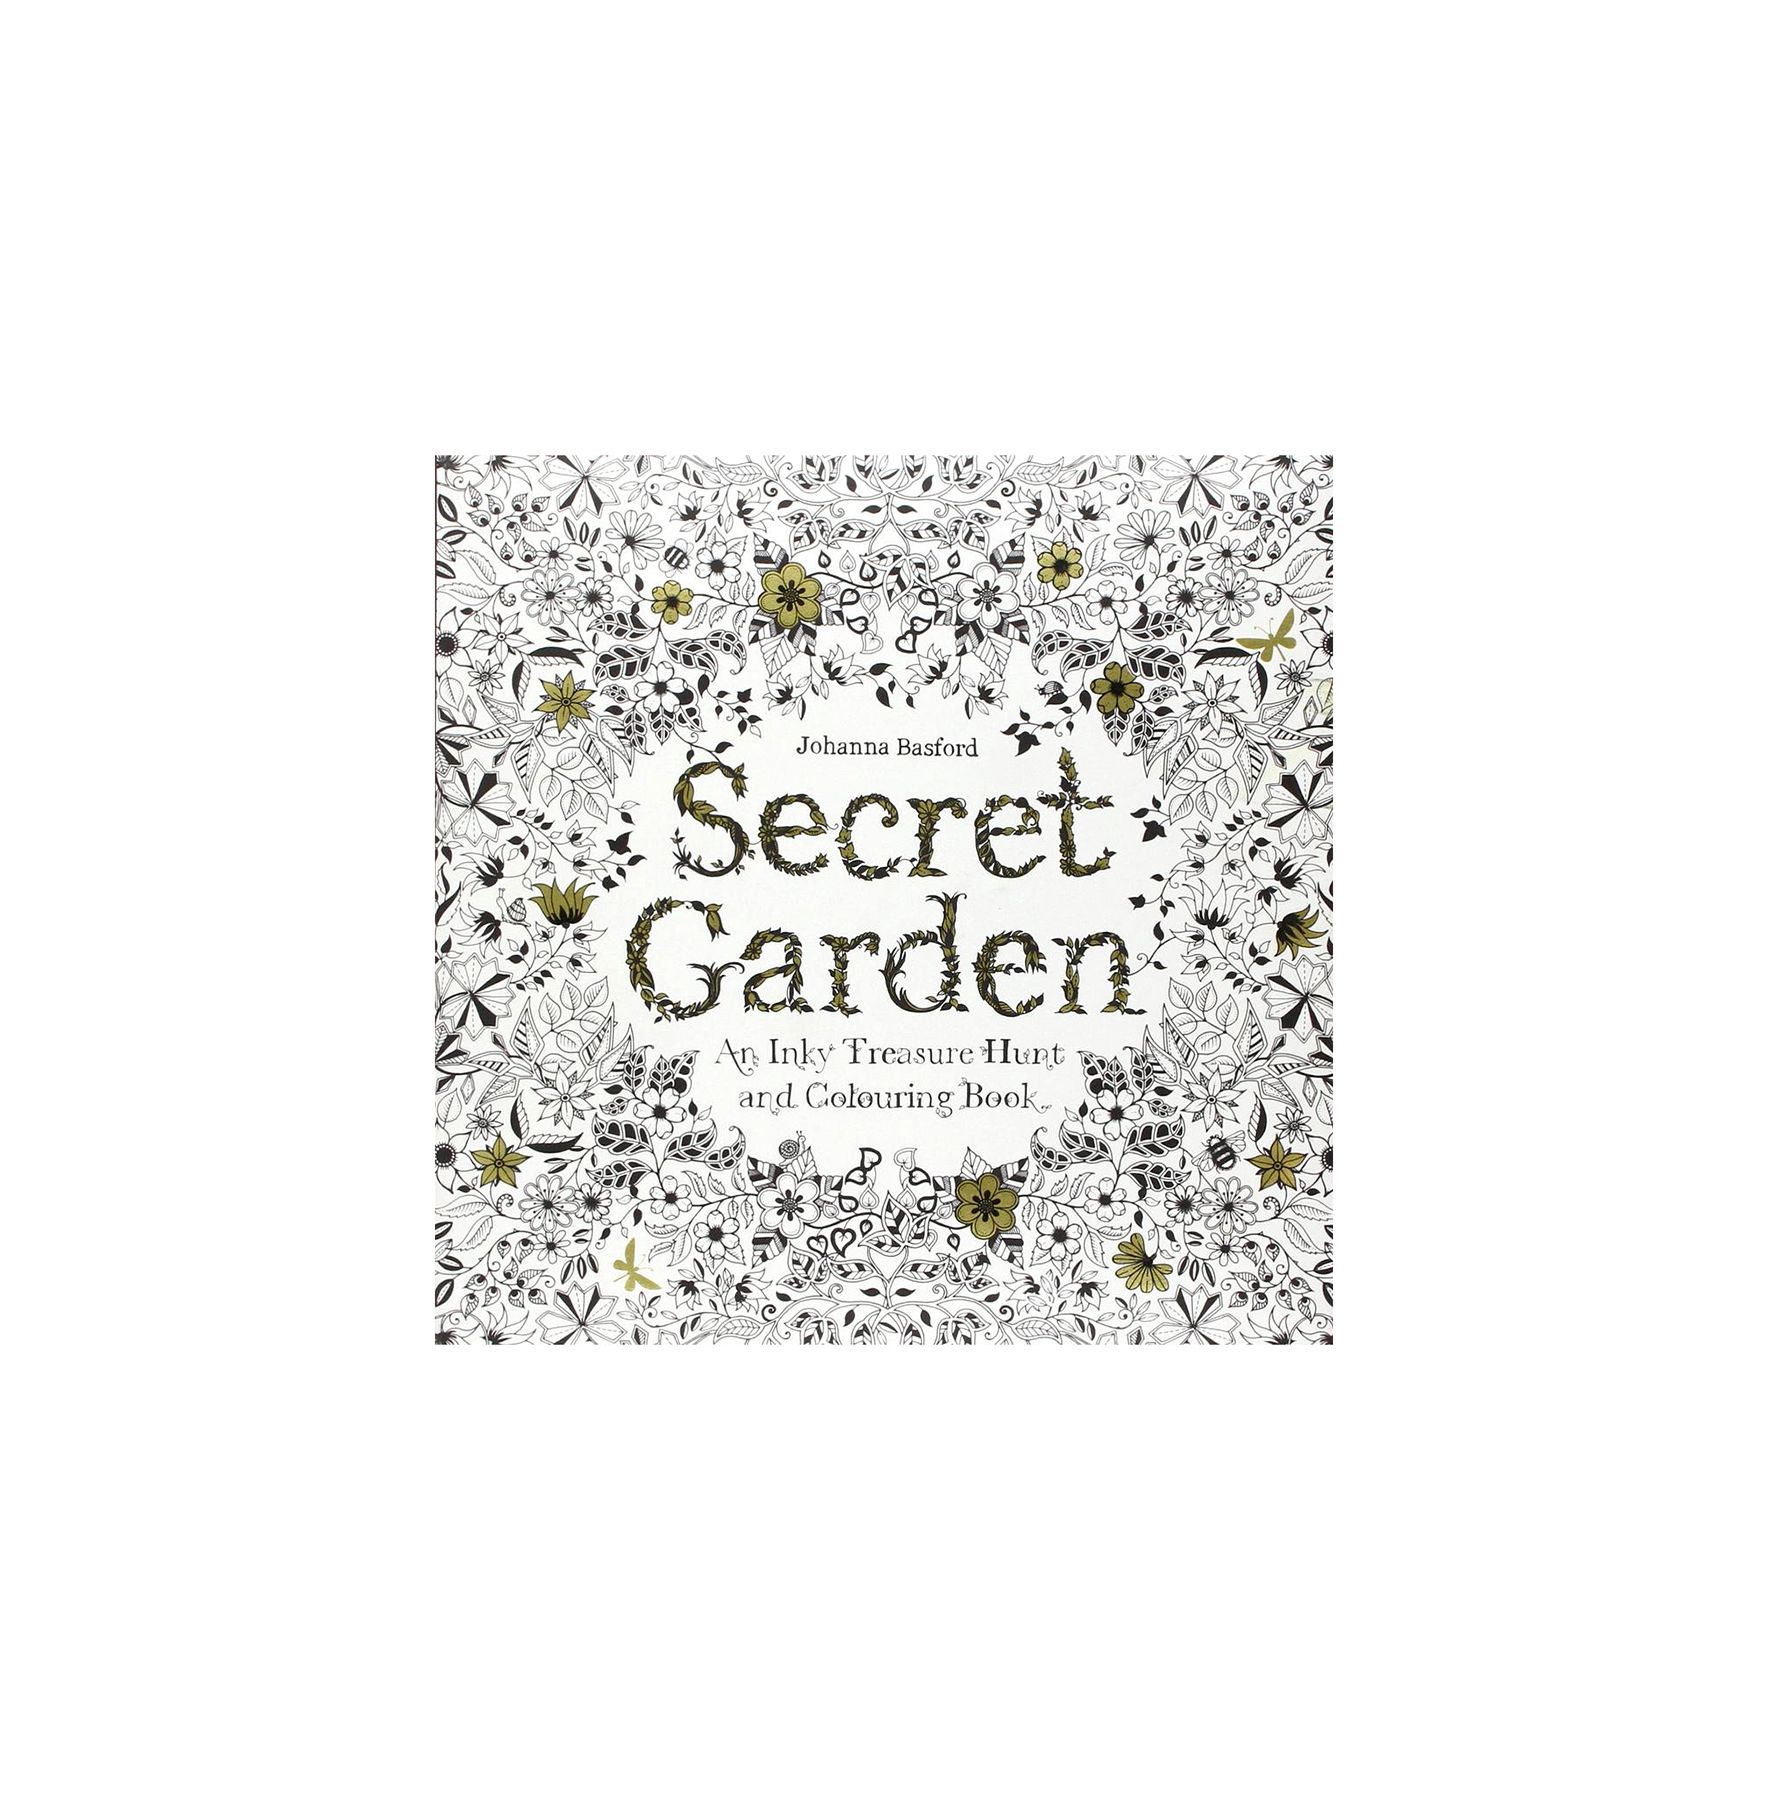 Secret Garden: An Bley Treasure Hunt and Coloring Book